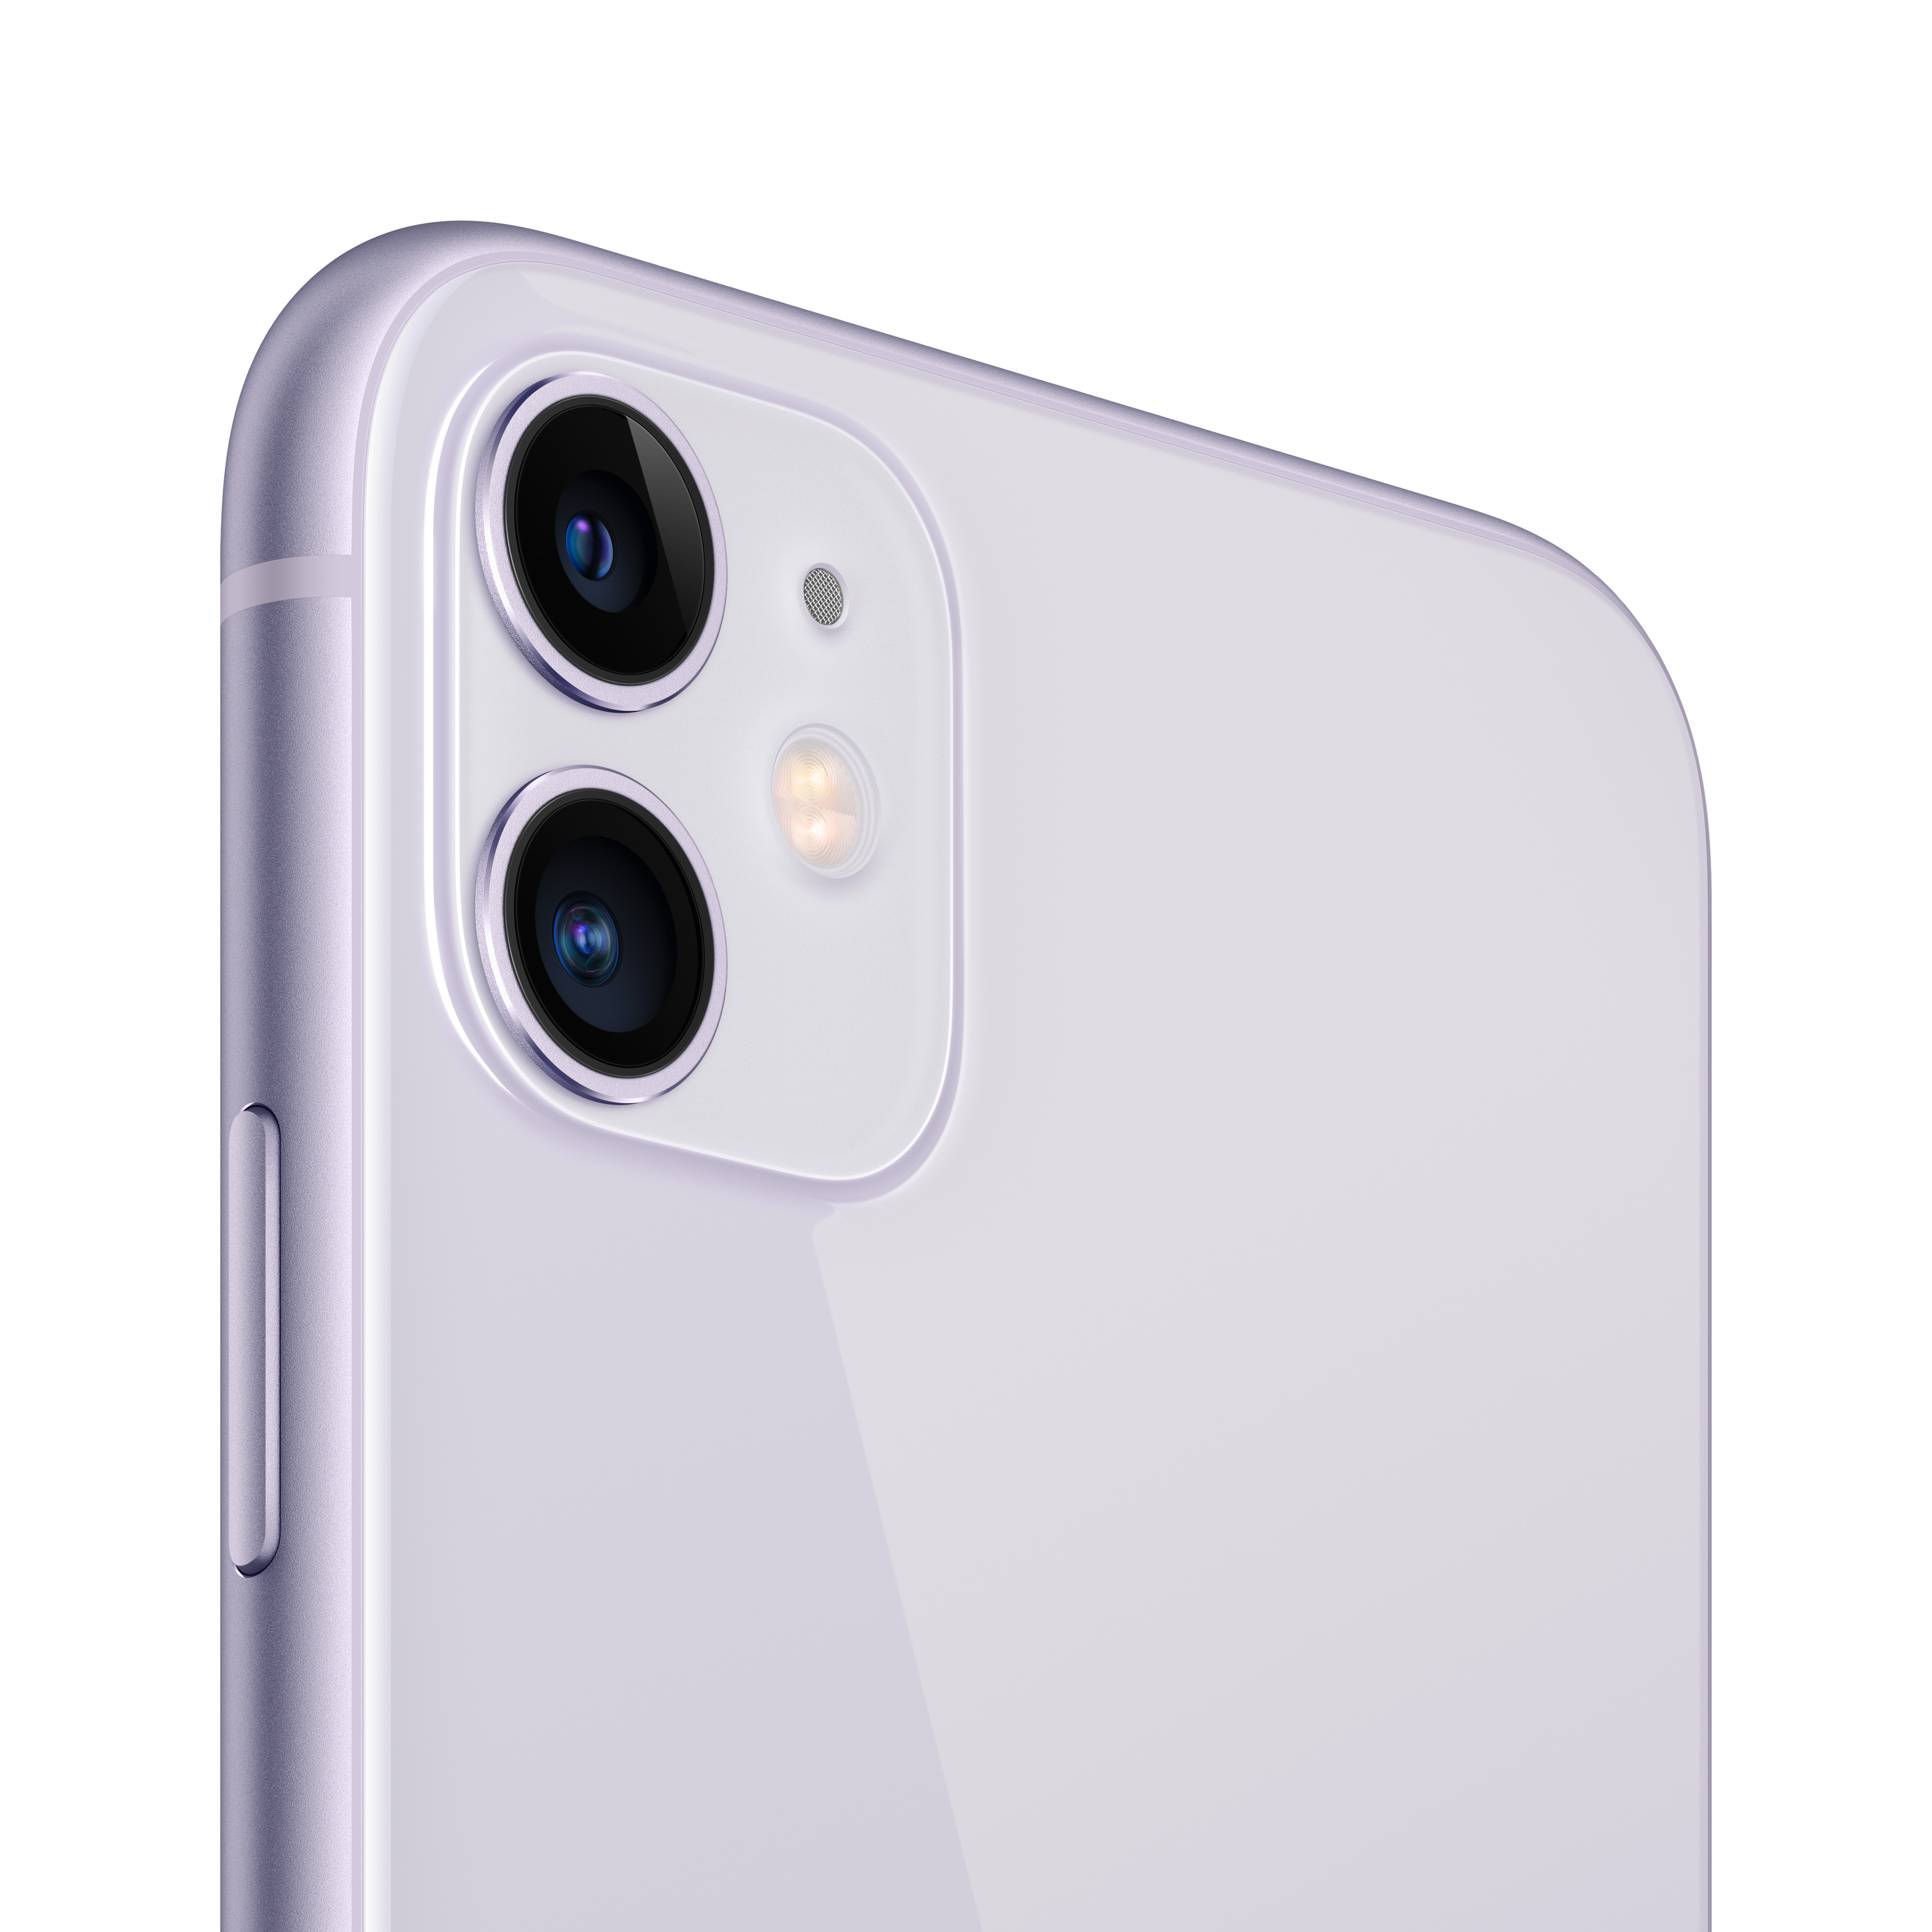 Apple iPhone 11, 128 ГБ, фиолетовый, новая комплектация